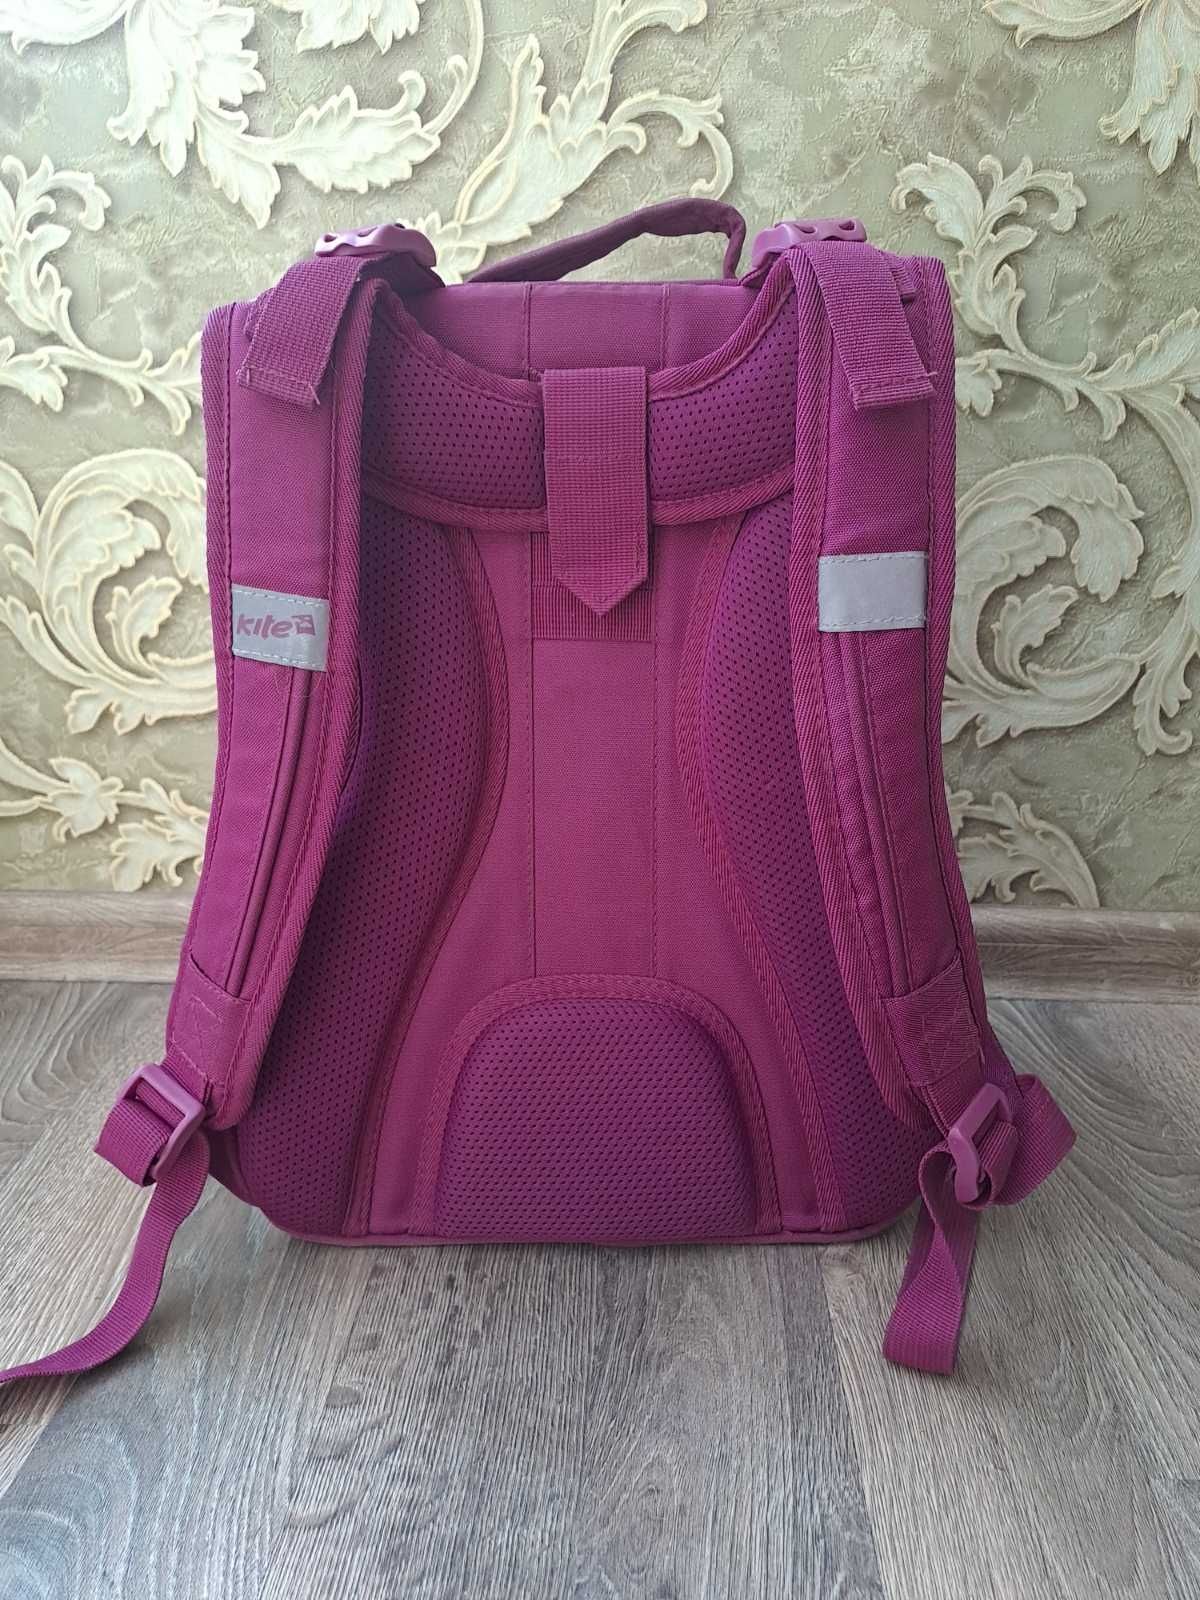 Каркасный рюкзак Kite для девочки